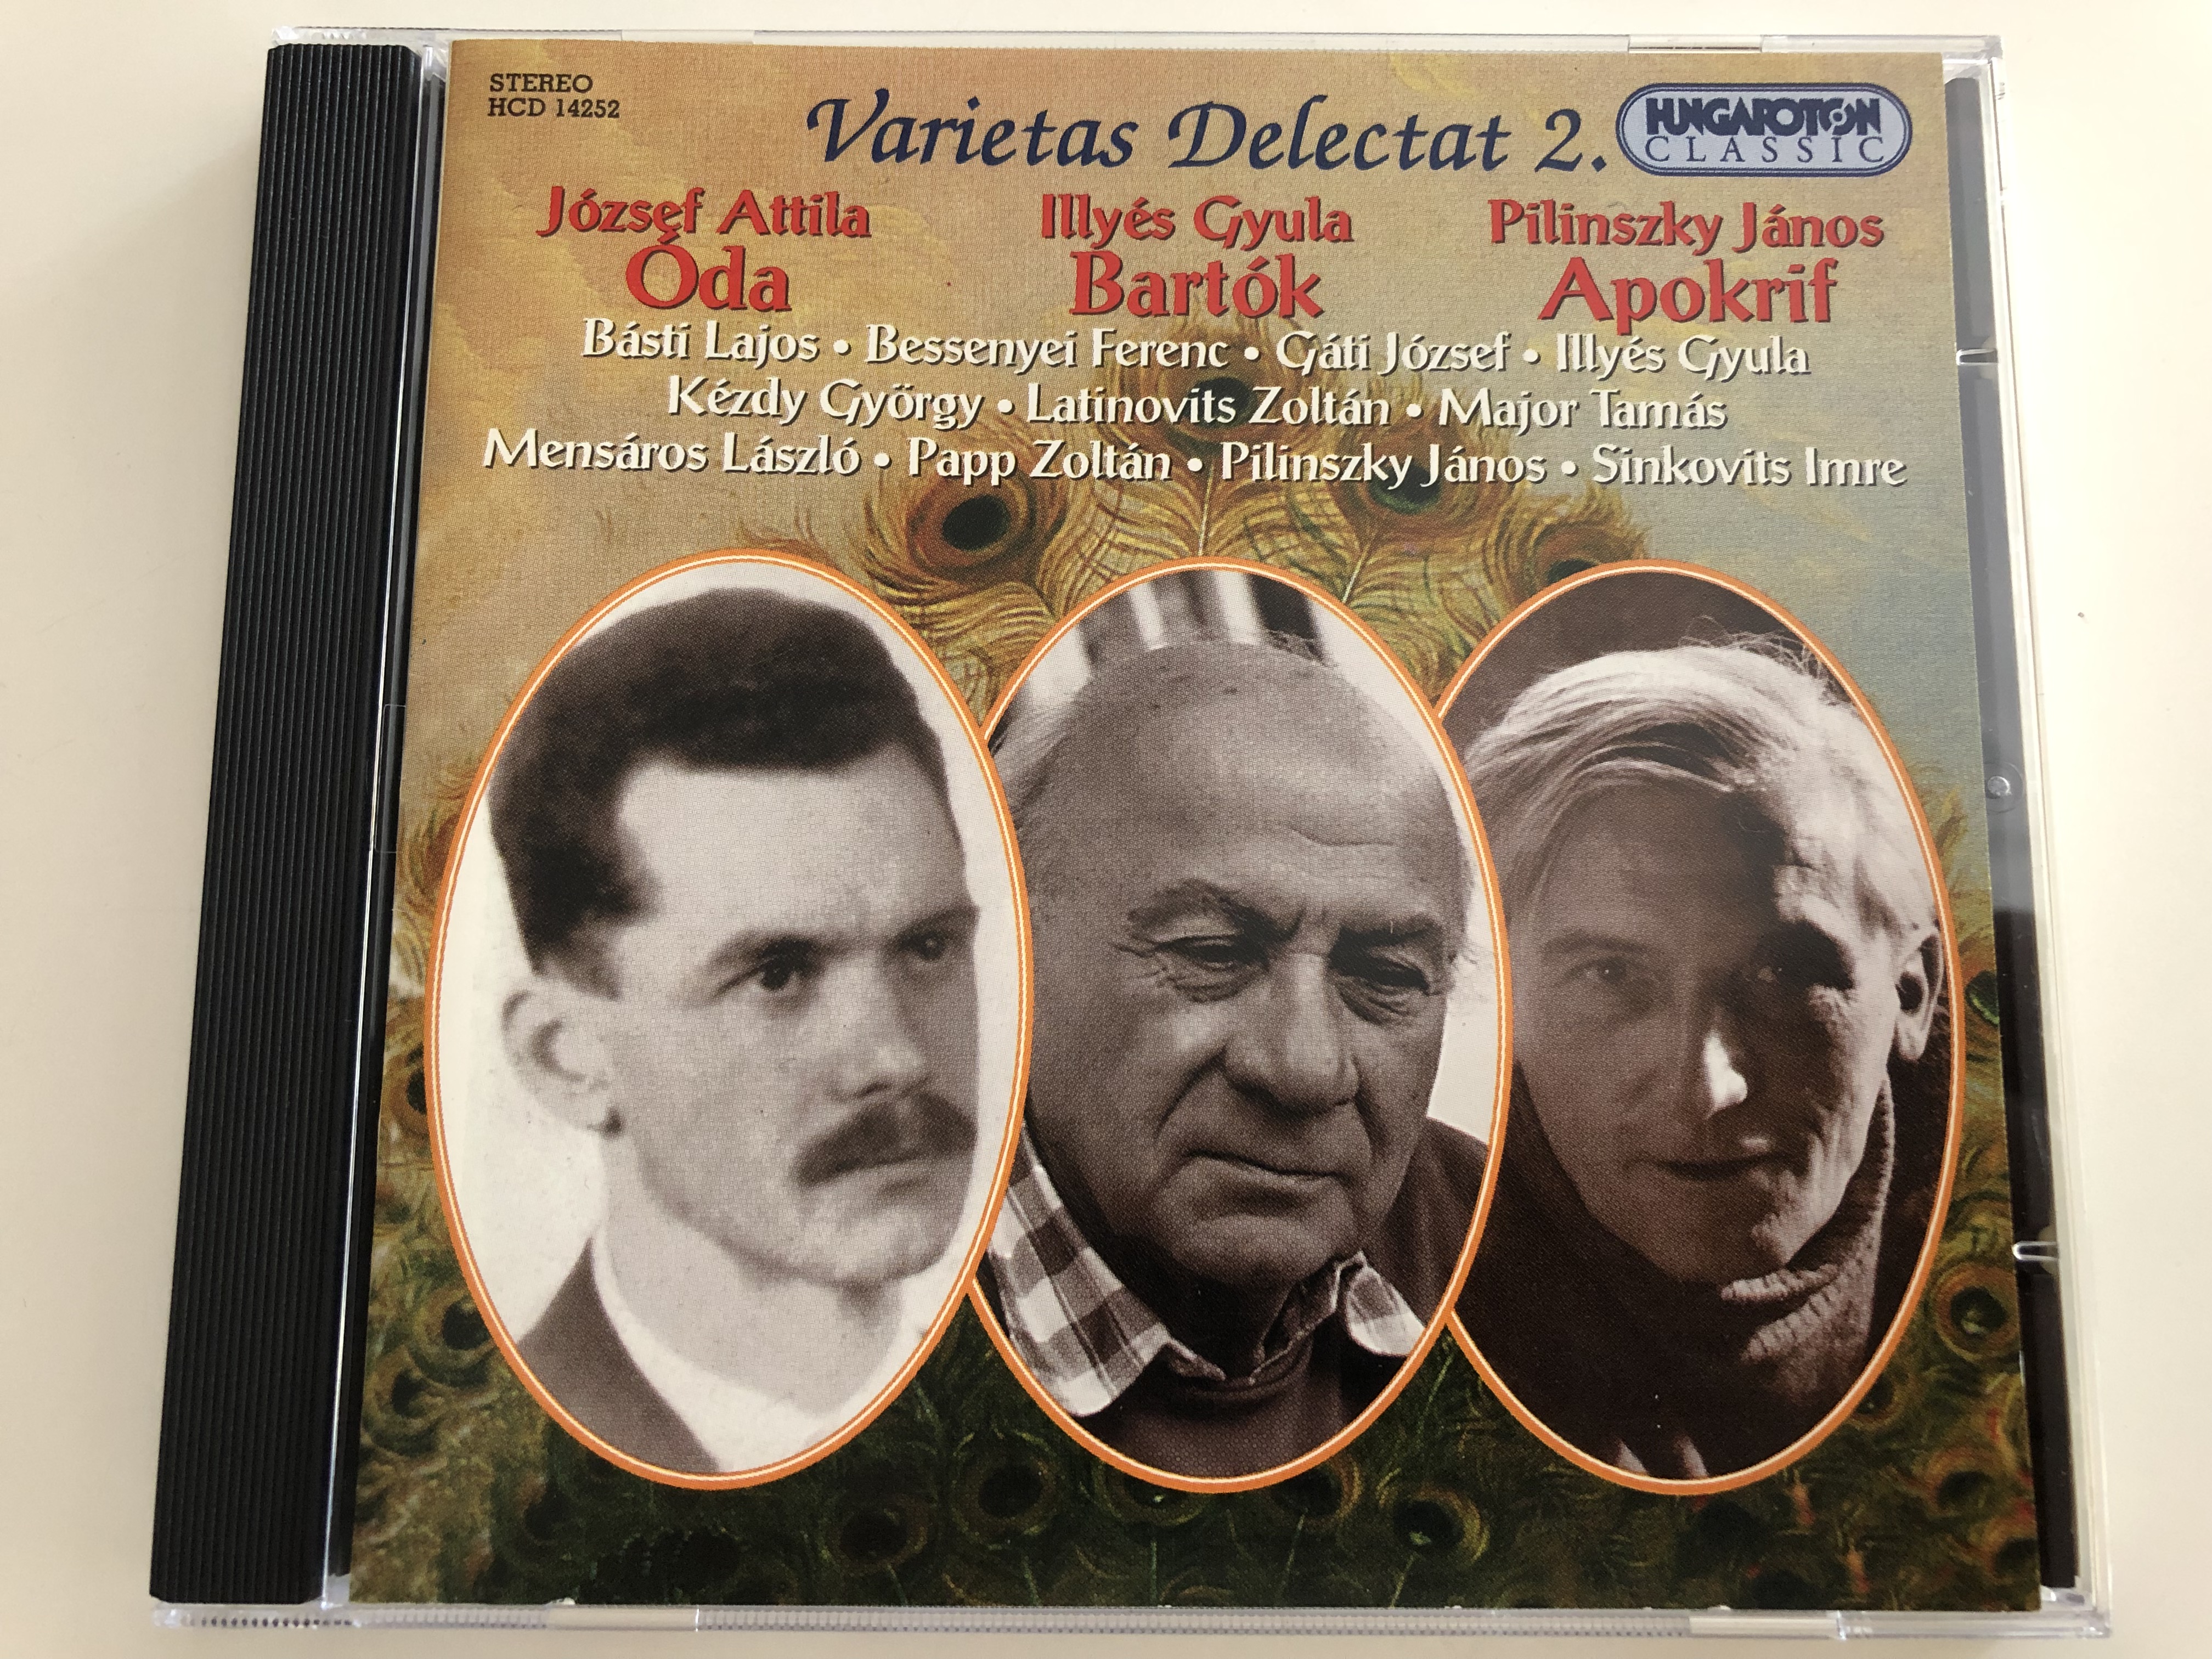 varietas-delectat-2.-j-zsef-attila-da-illy-s-gyula-bart-k-pilinszky-j-nos-apokrif-hungaroton-classic-audio-cd-1998-hcd-14252-1-.jpg